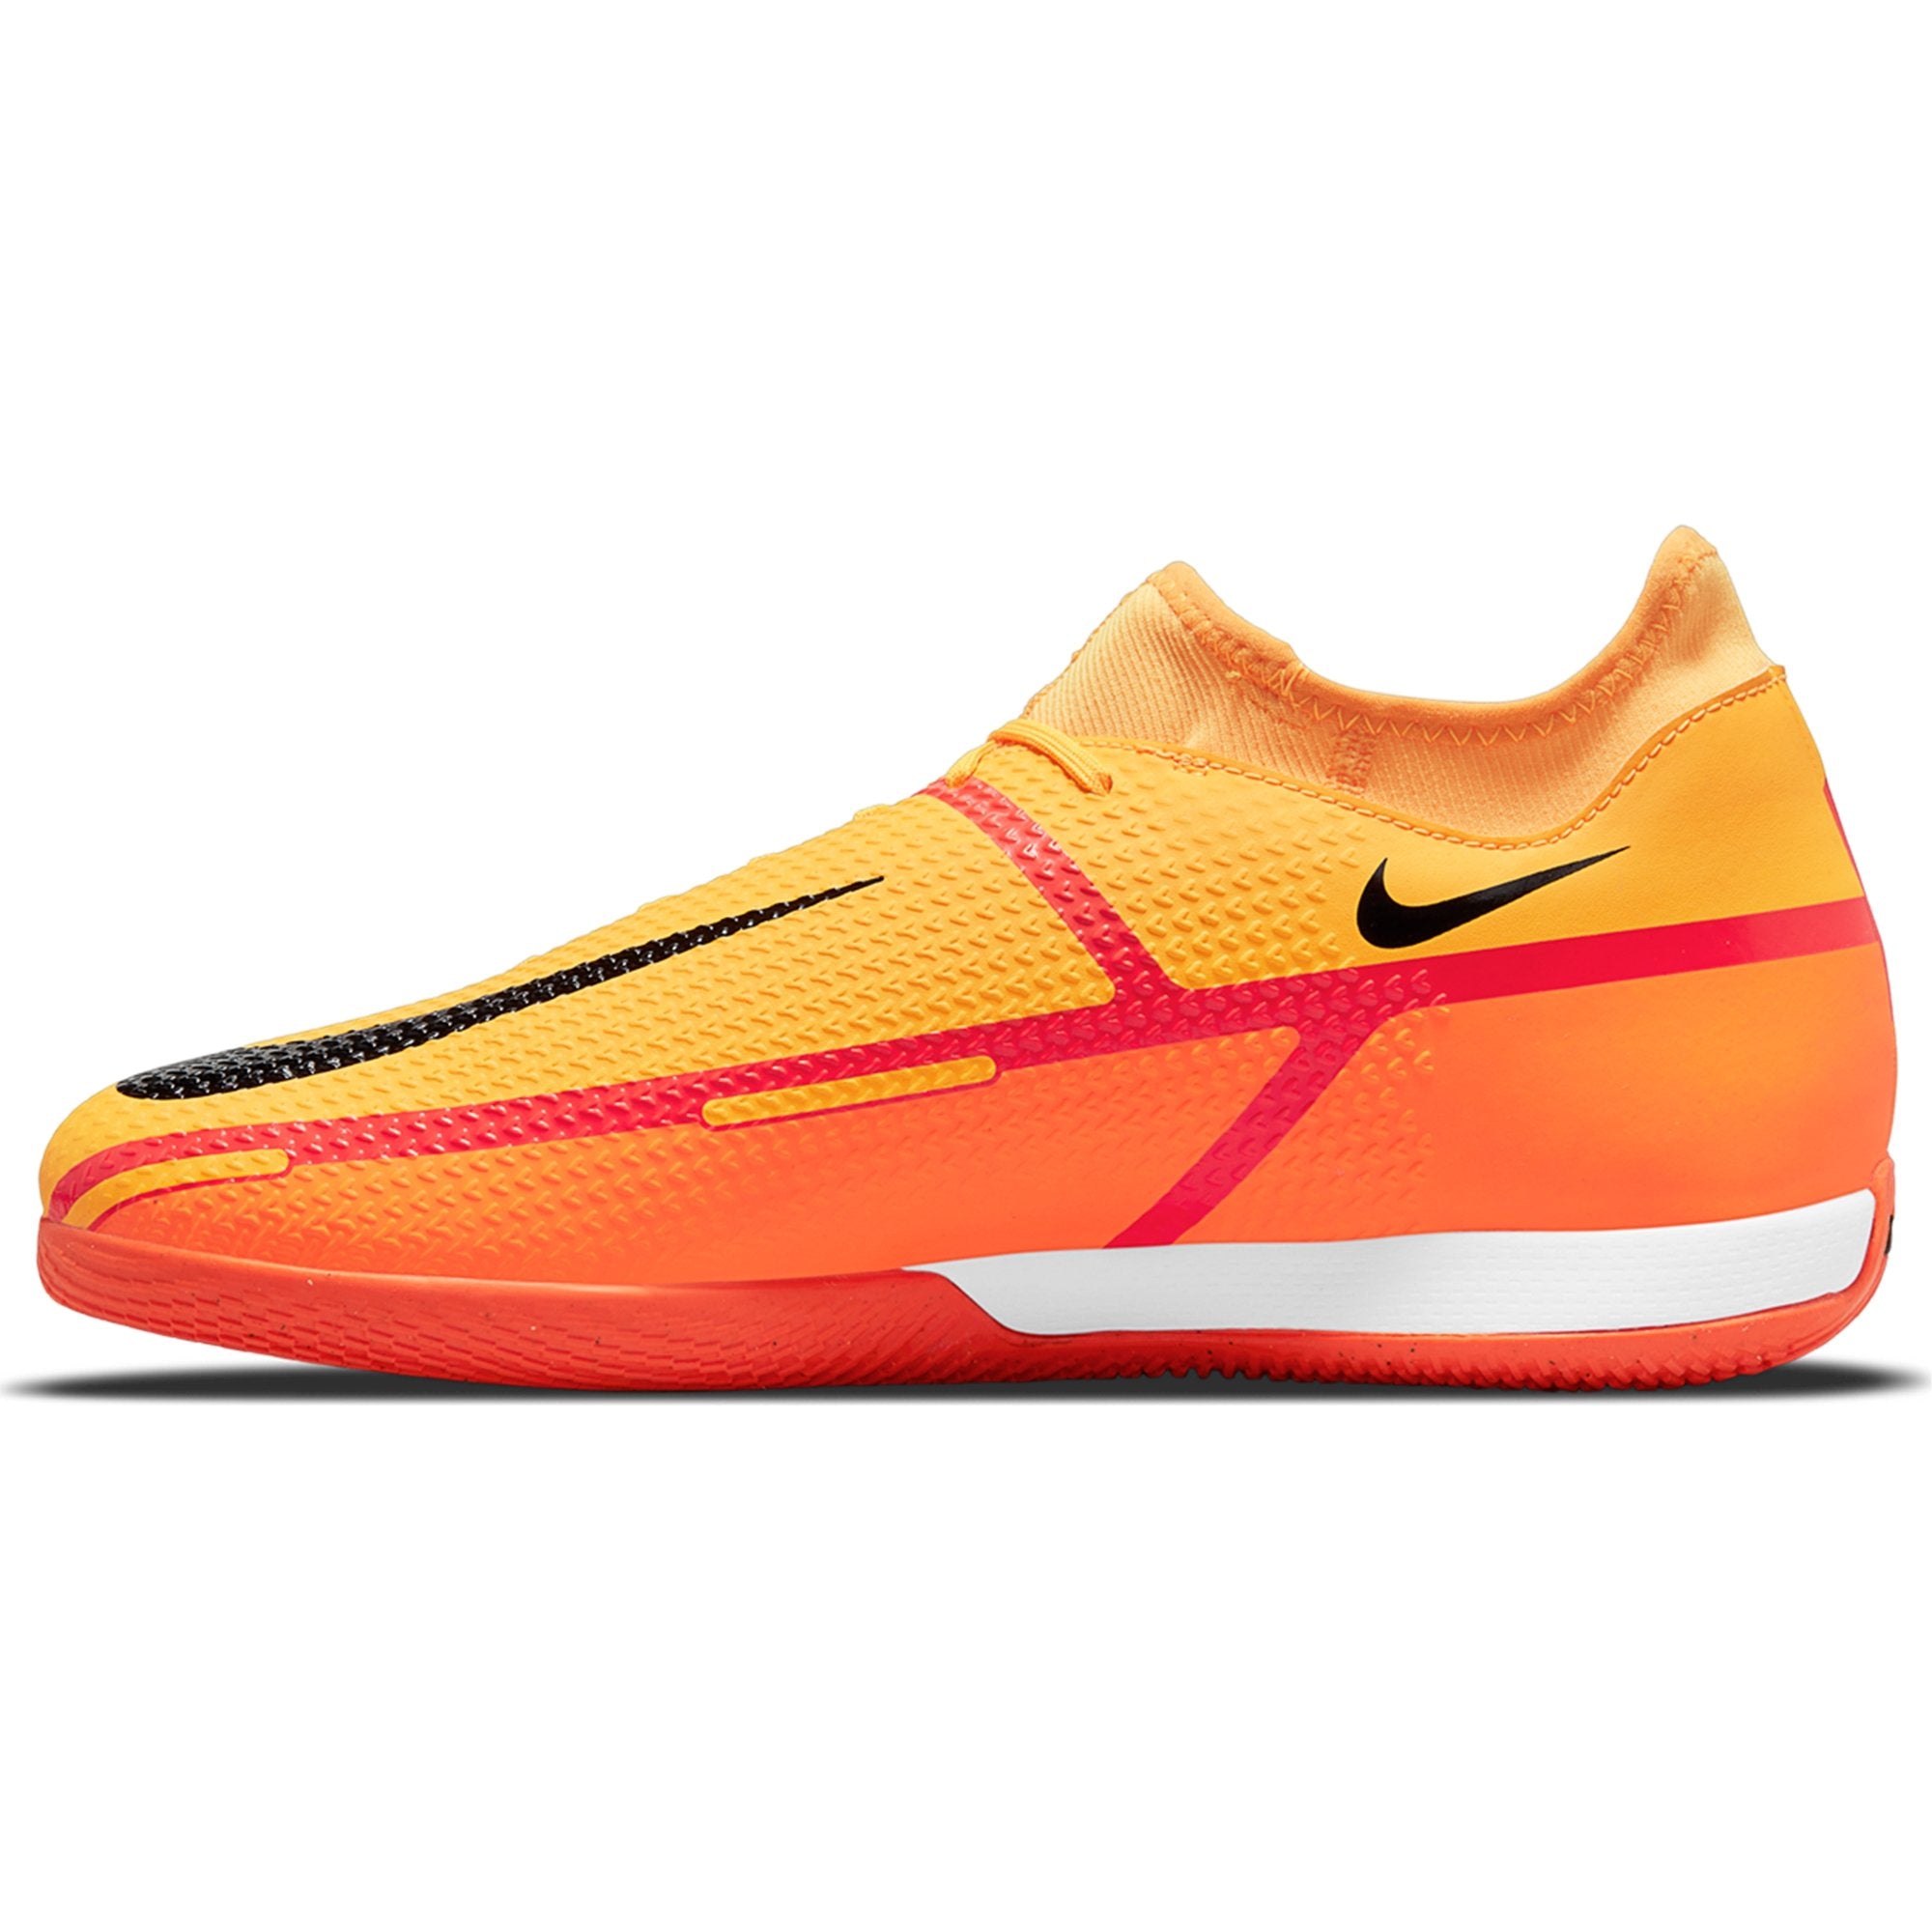 Nike Phantom GT2 Academy DF IC Indoor Soccer Shoe - Laser Orange